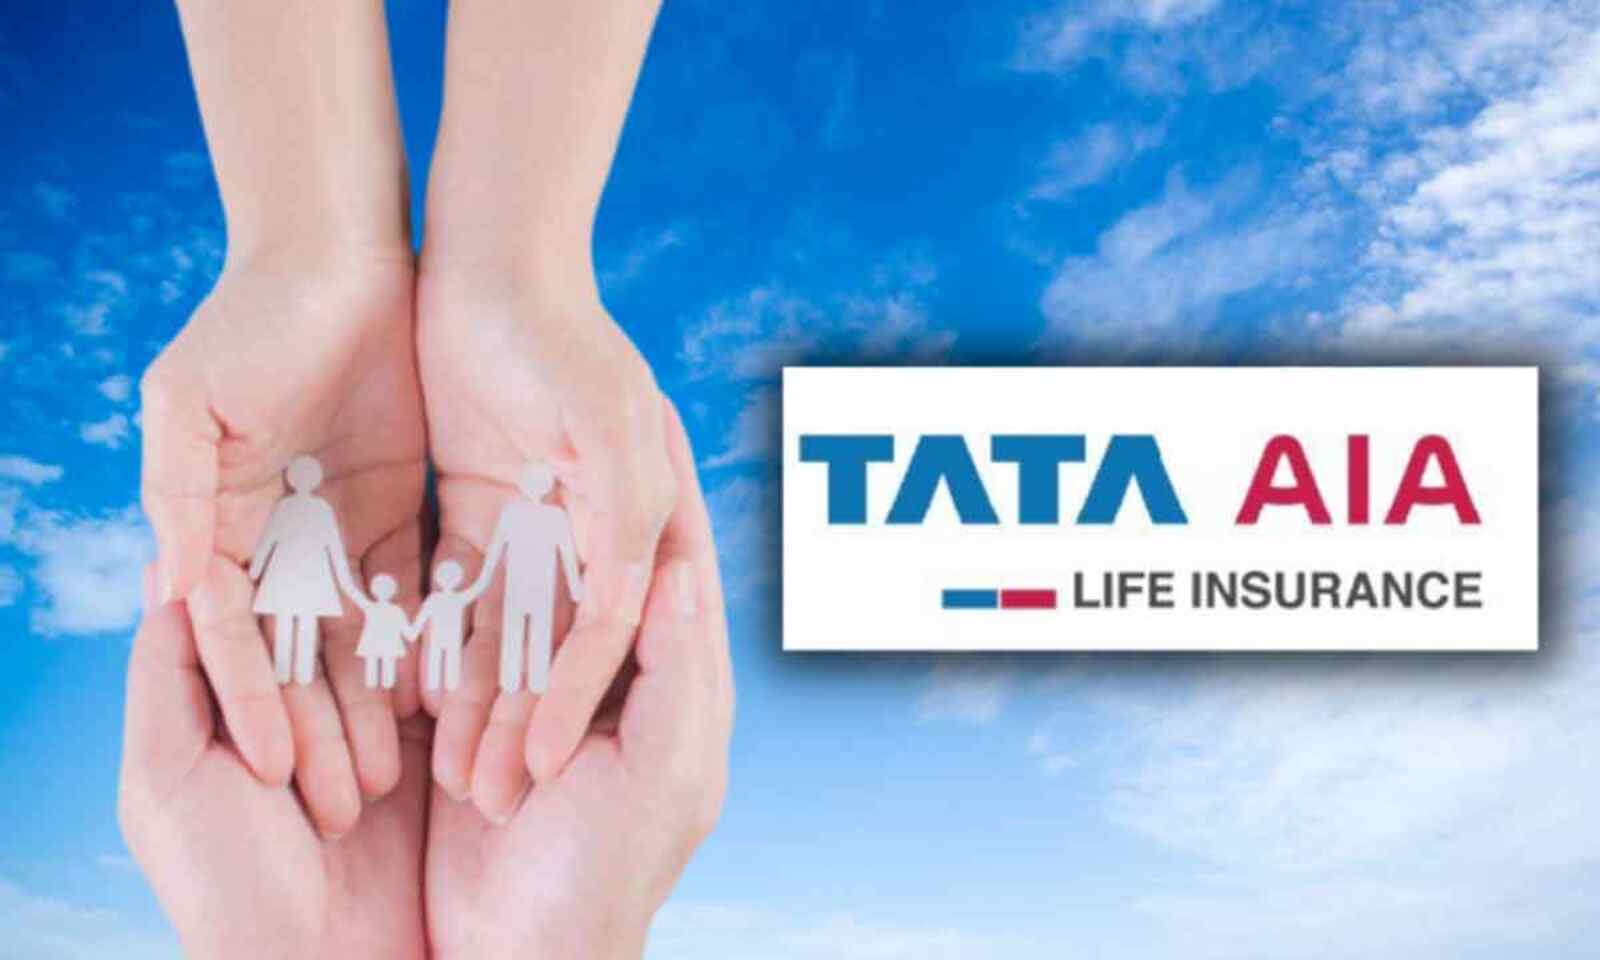 Tata AIA Life Insurance launches Rakshakaran Hero initiative with Republic  Media Network - Exchange4media